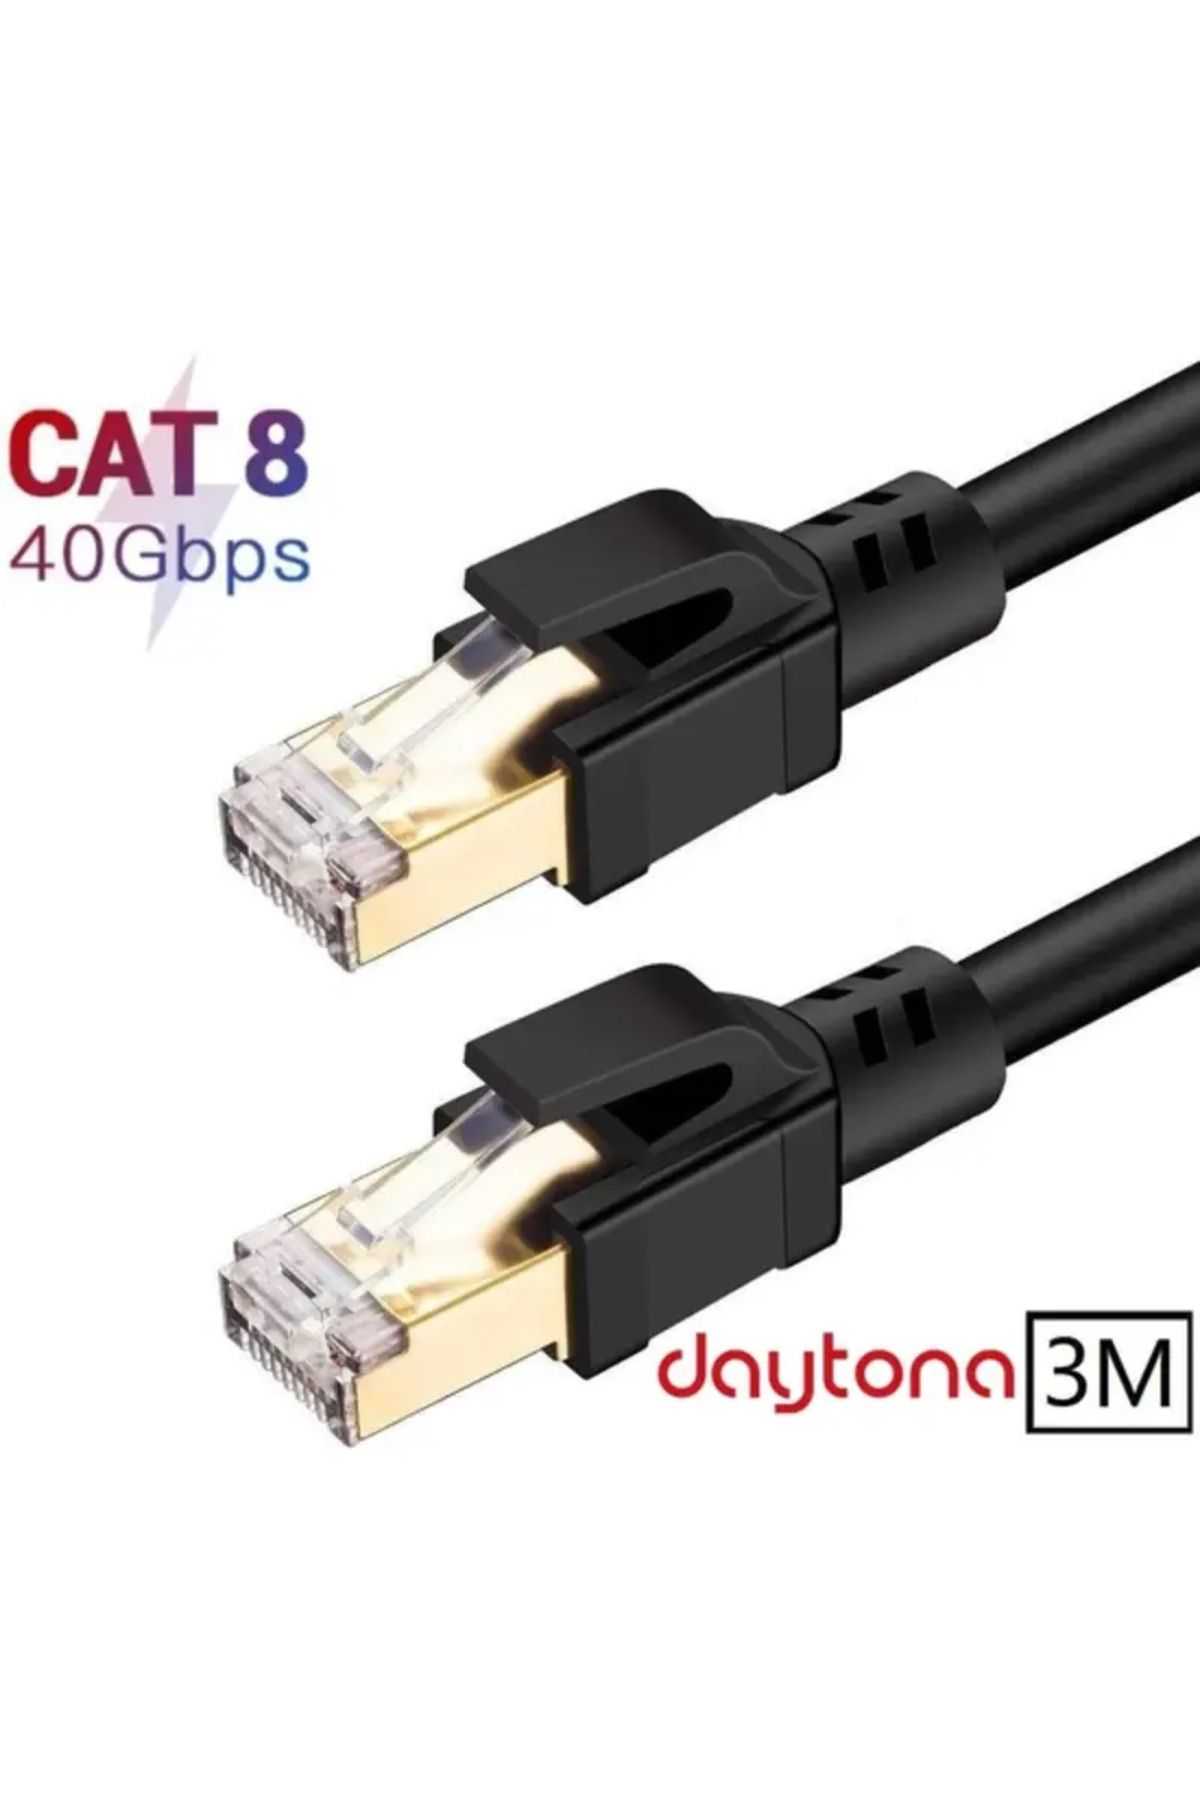 Daytona A5215 Gıgabıt Cat8 40gbps S/ftp 2000mhz Altın Uçlu Yüksek Hızlı Internet Kablosu (3 METRE)